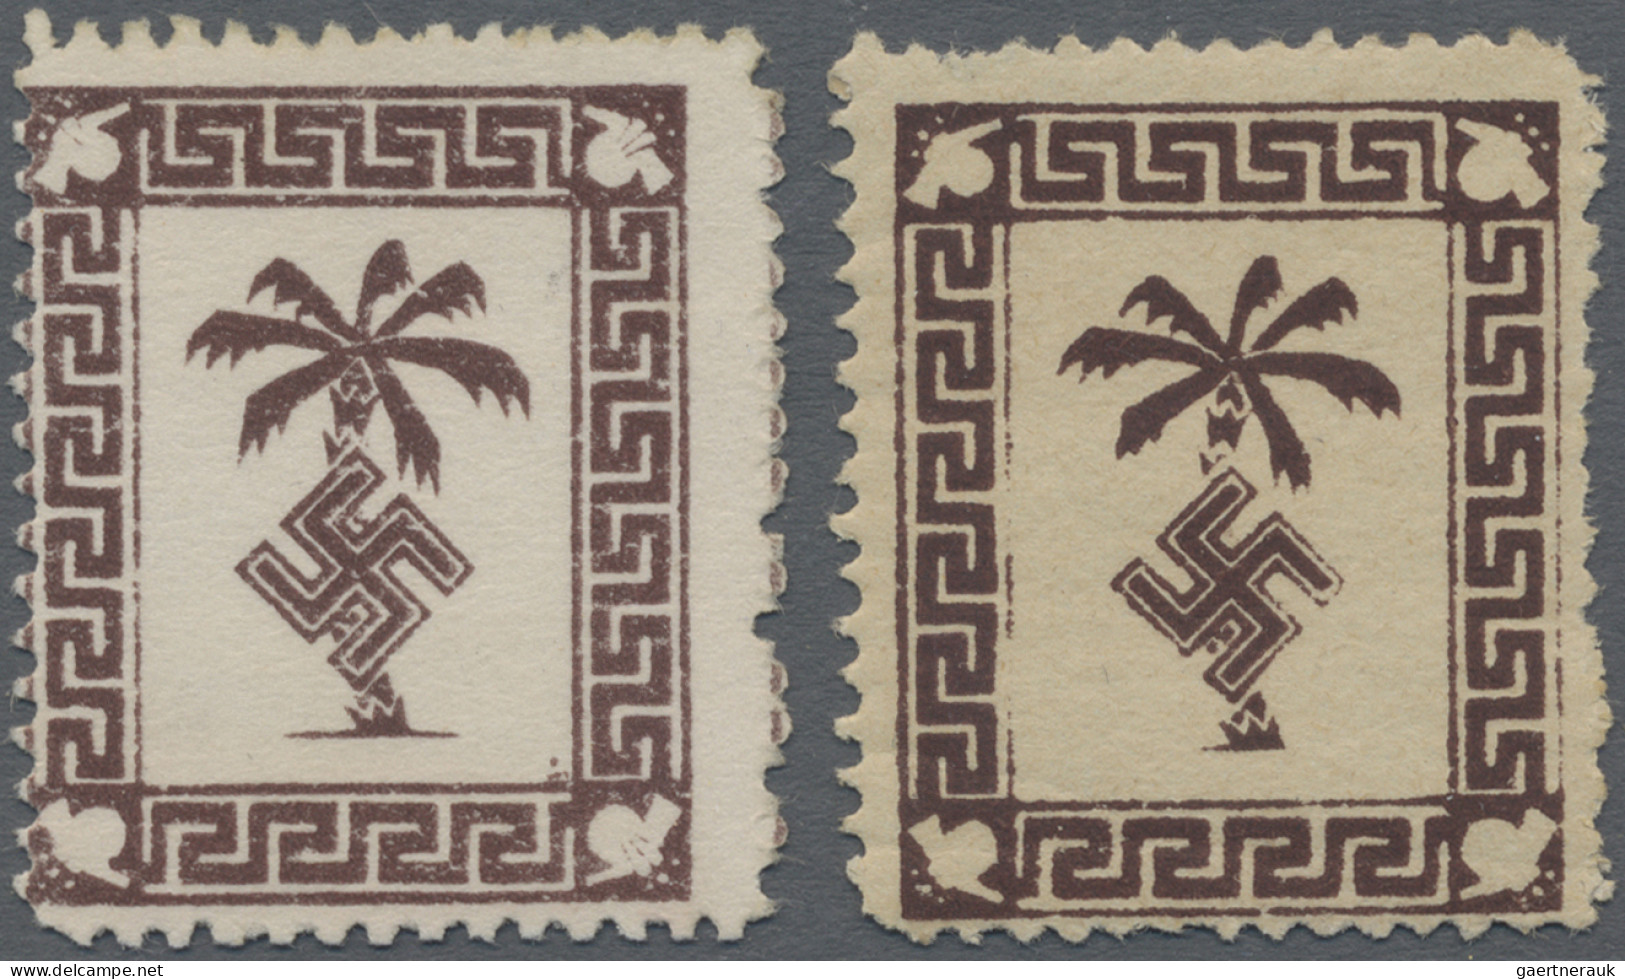 Feldpostmarken: 1943, Tunis-Päckchenmarke In Beiden Papiersorten: Auf Dickem Pap - Other & Unclassified